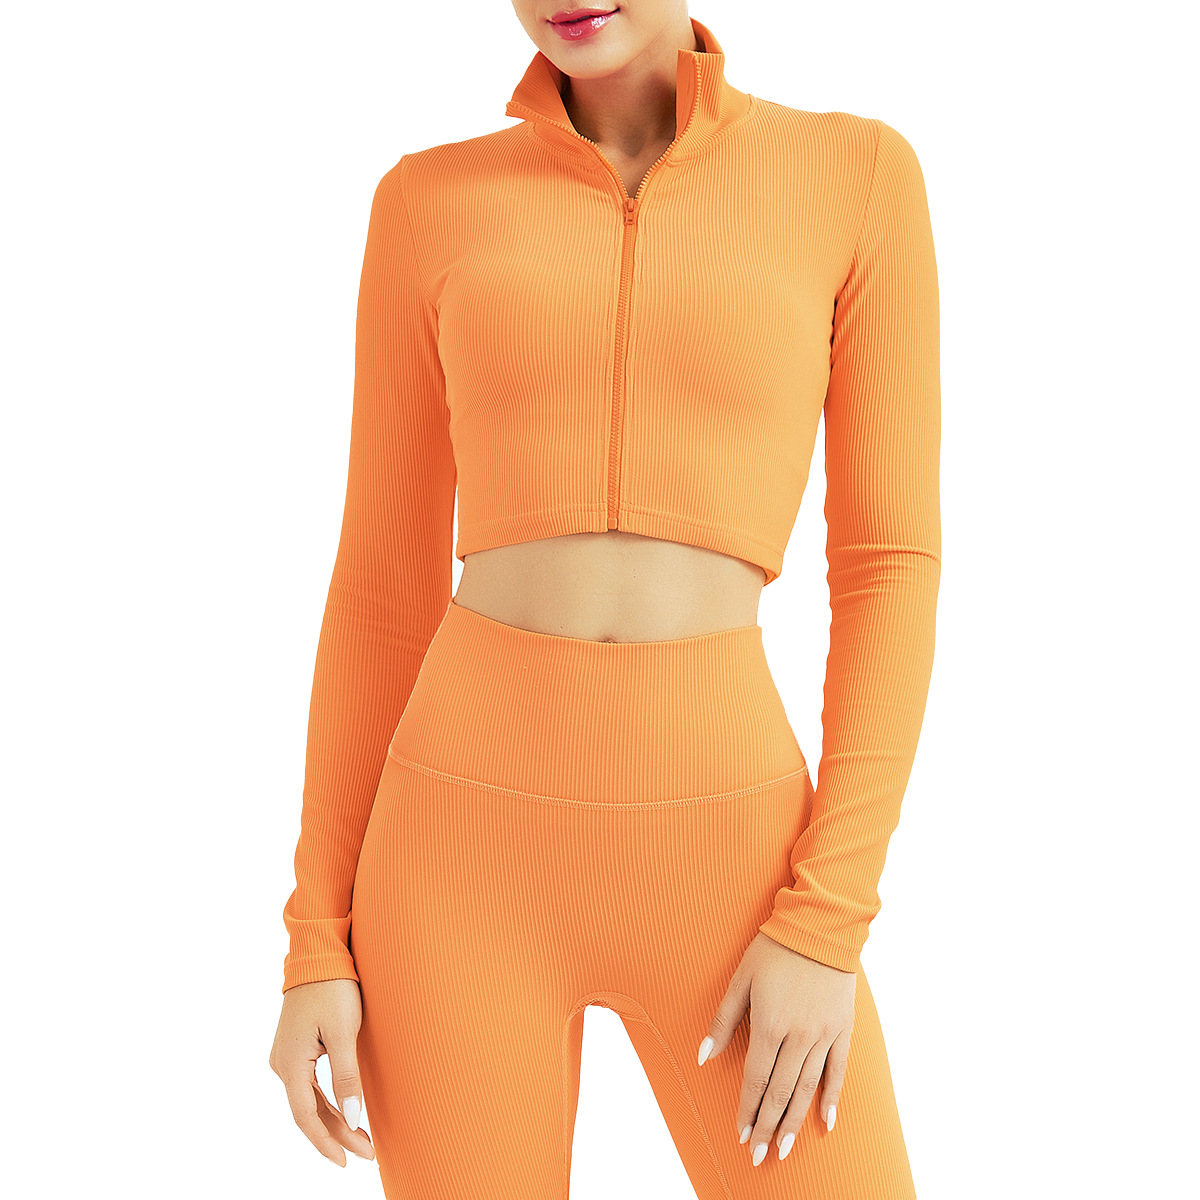 Safety Orange Crop Bra - Customizable 3D bra designed for your curves. –  AndHerShop